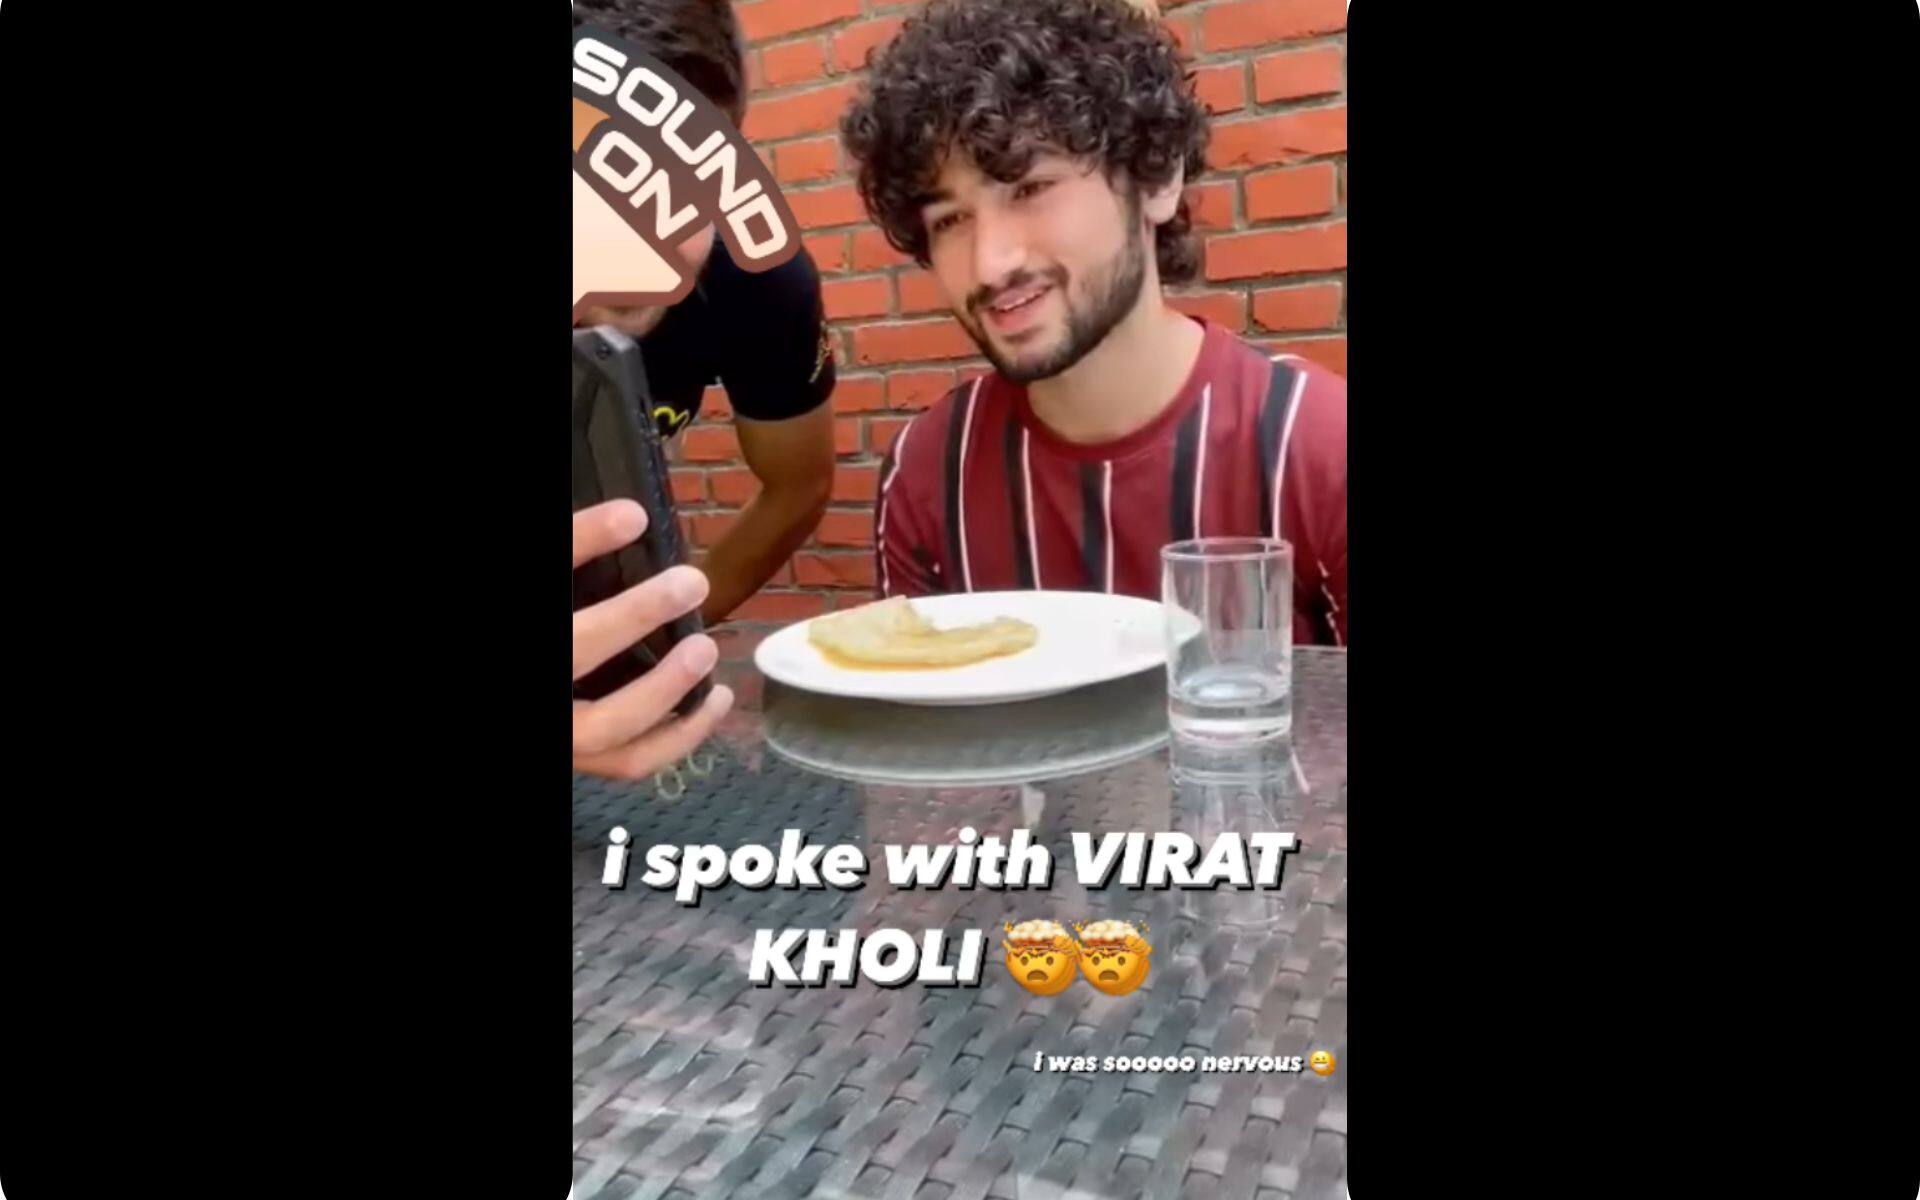 Virat Kohli speaking to a fan (X.com)